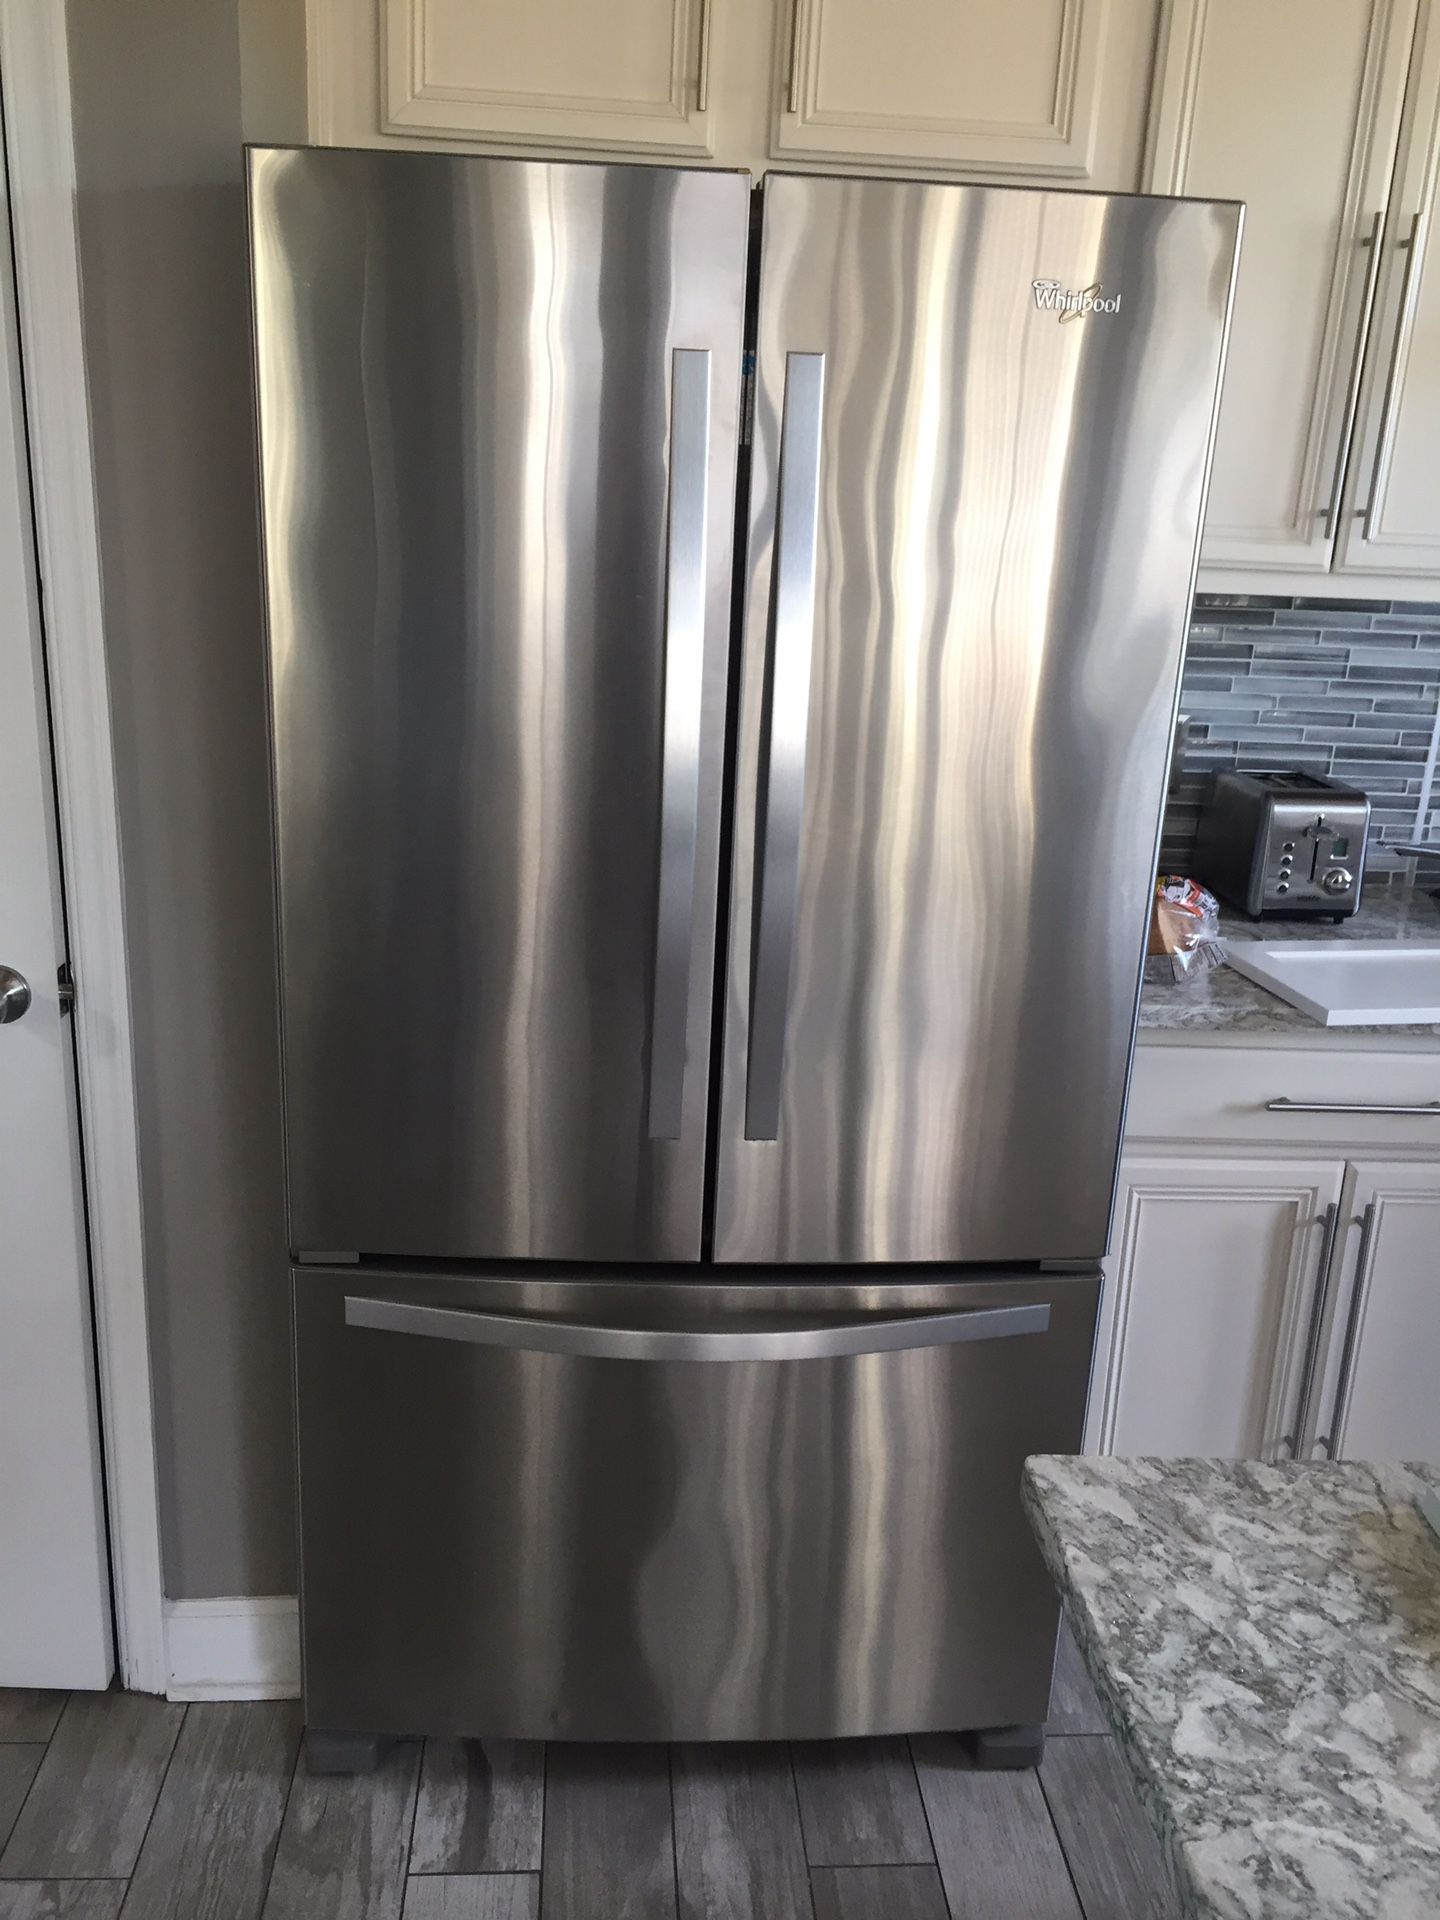 Whirlpool refrigerator mint condition